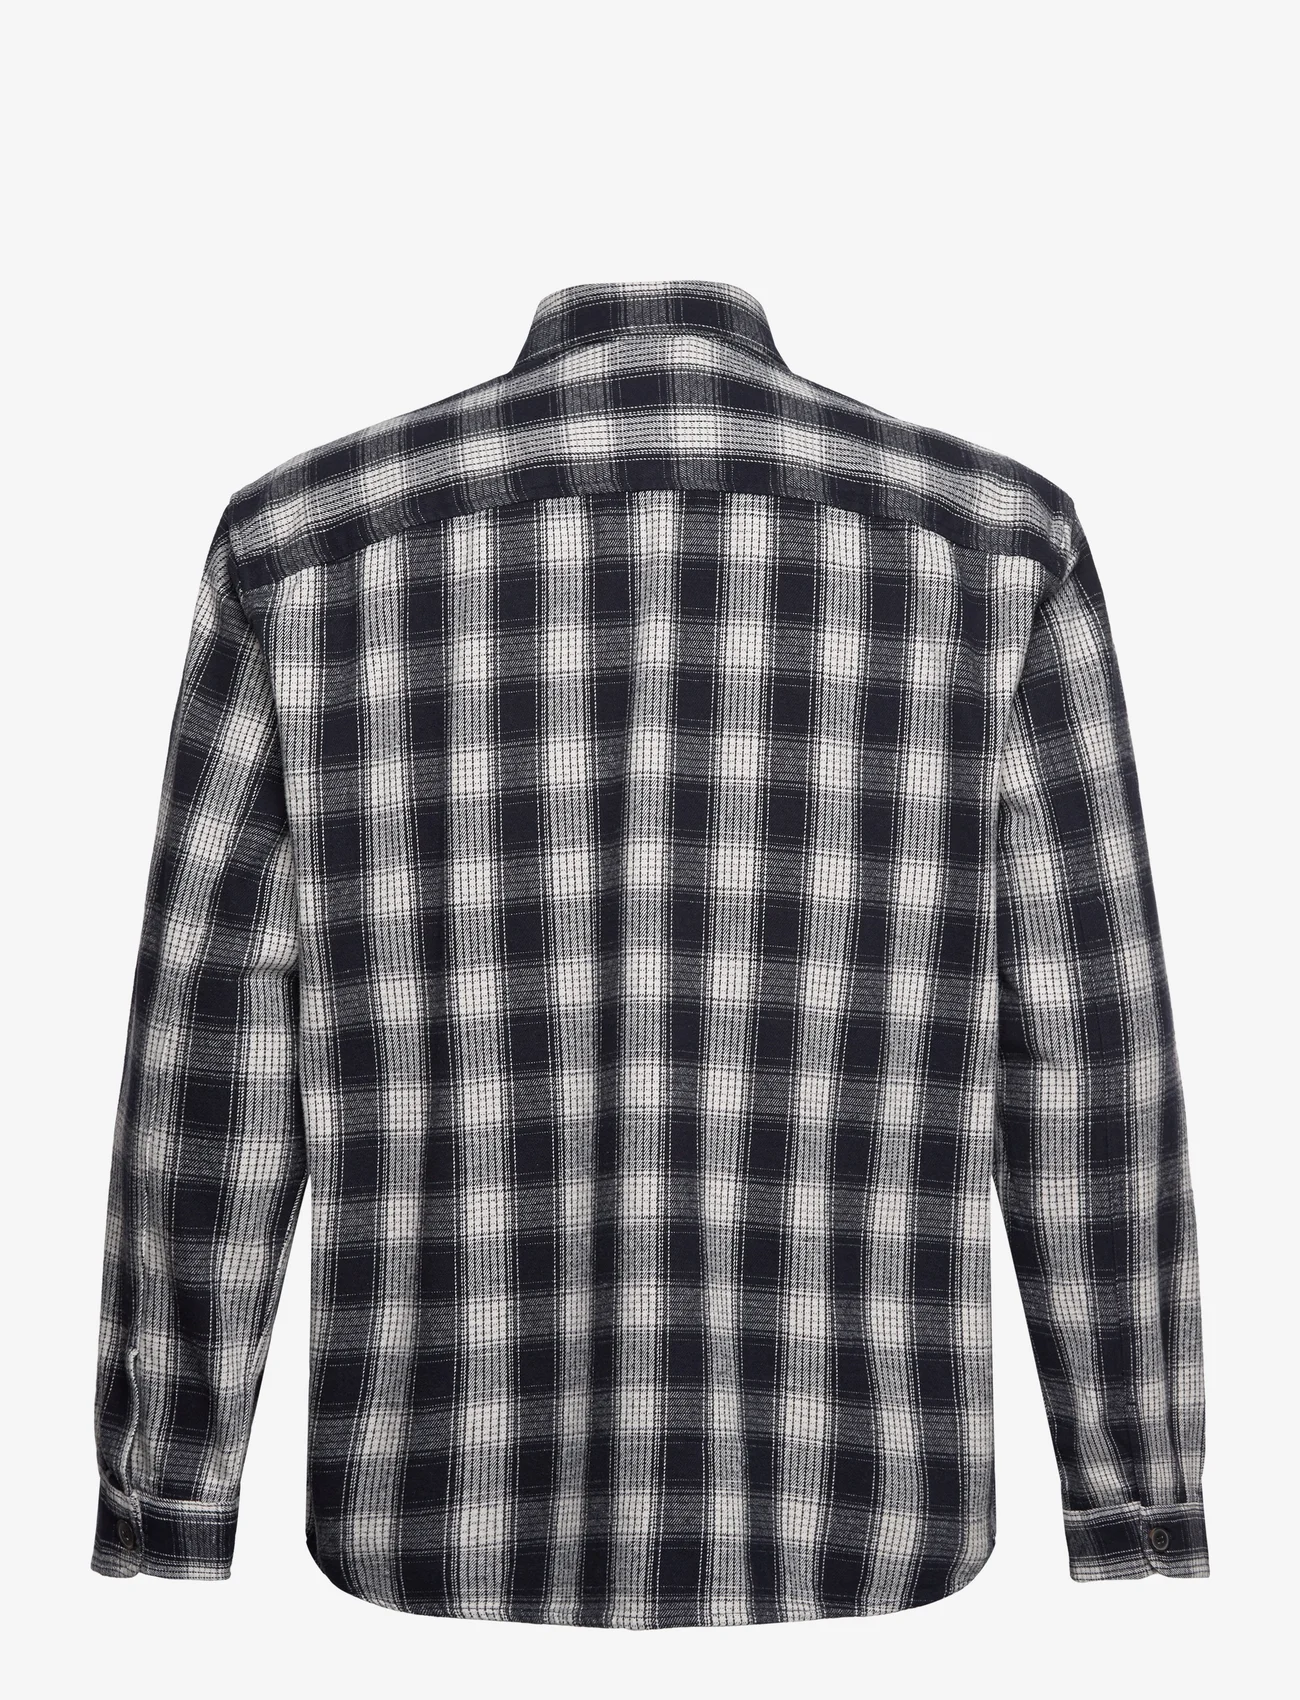 Selected Homme - SLHLOOSEMASON-FLANNEL OVERSHIRT NOOS - checkered shirts - dark navy - 1